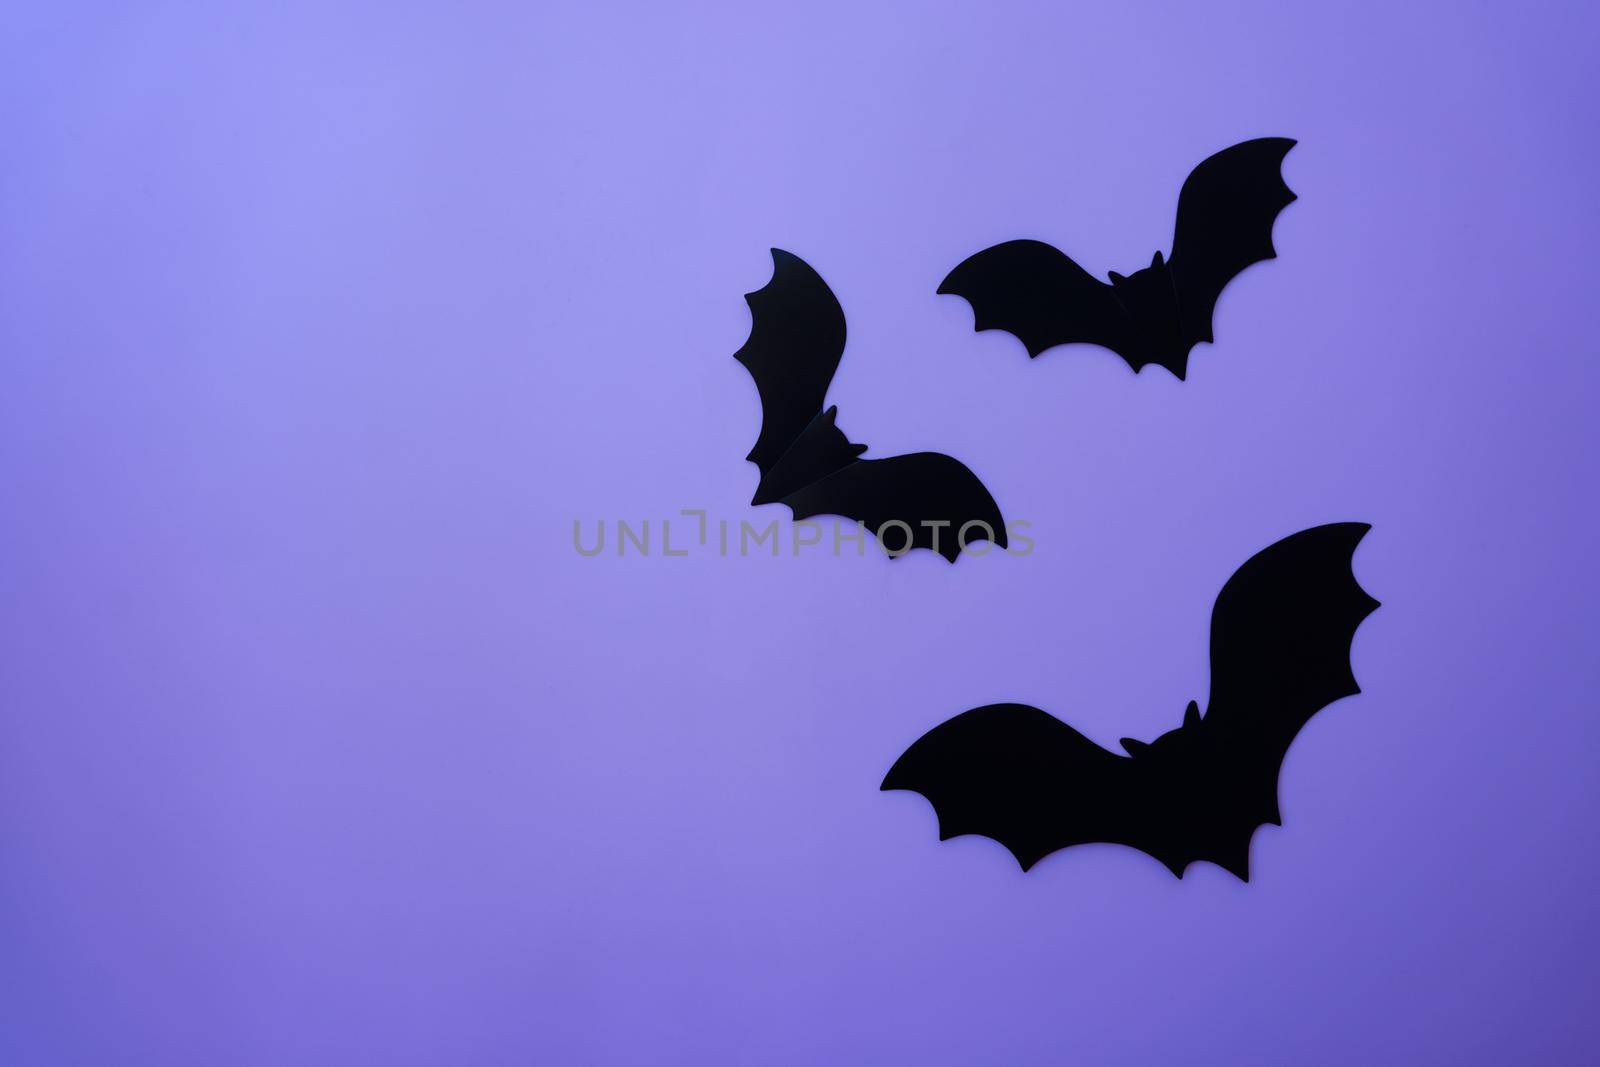 Bats and mockups on a purple background by Spirina